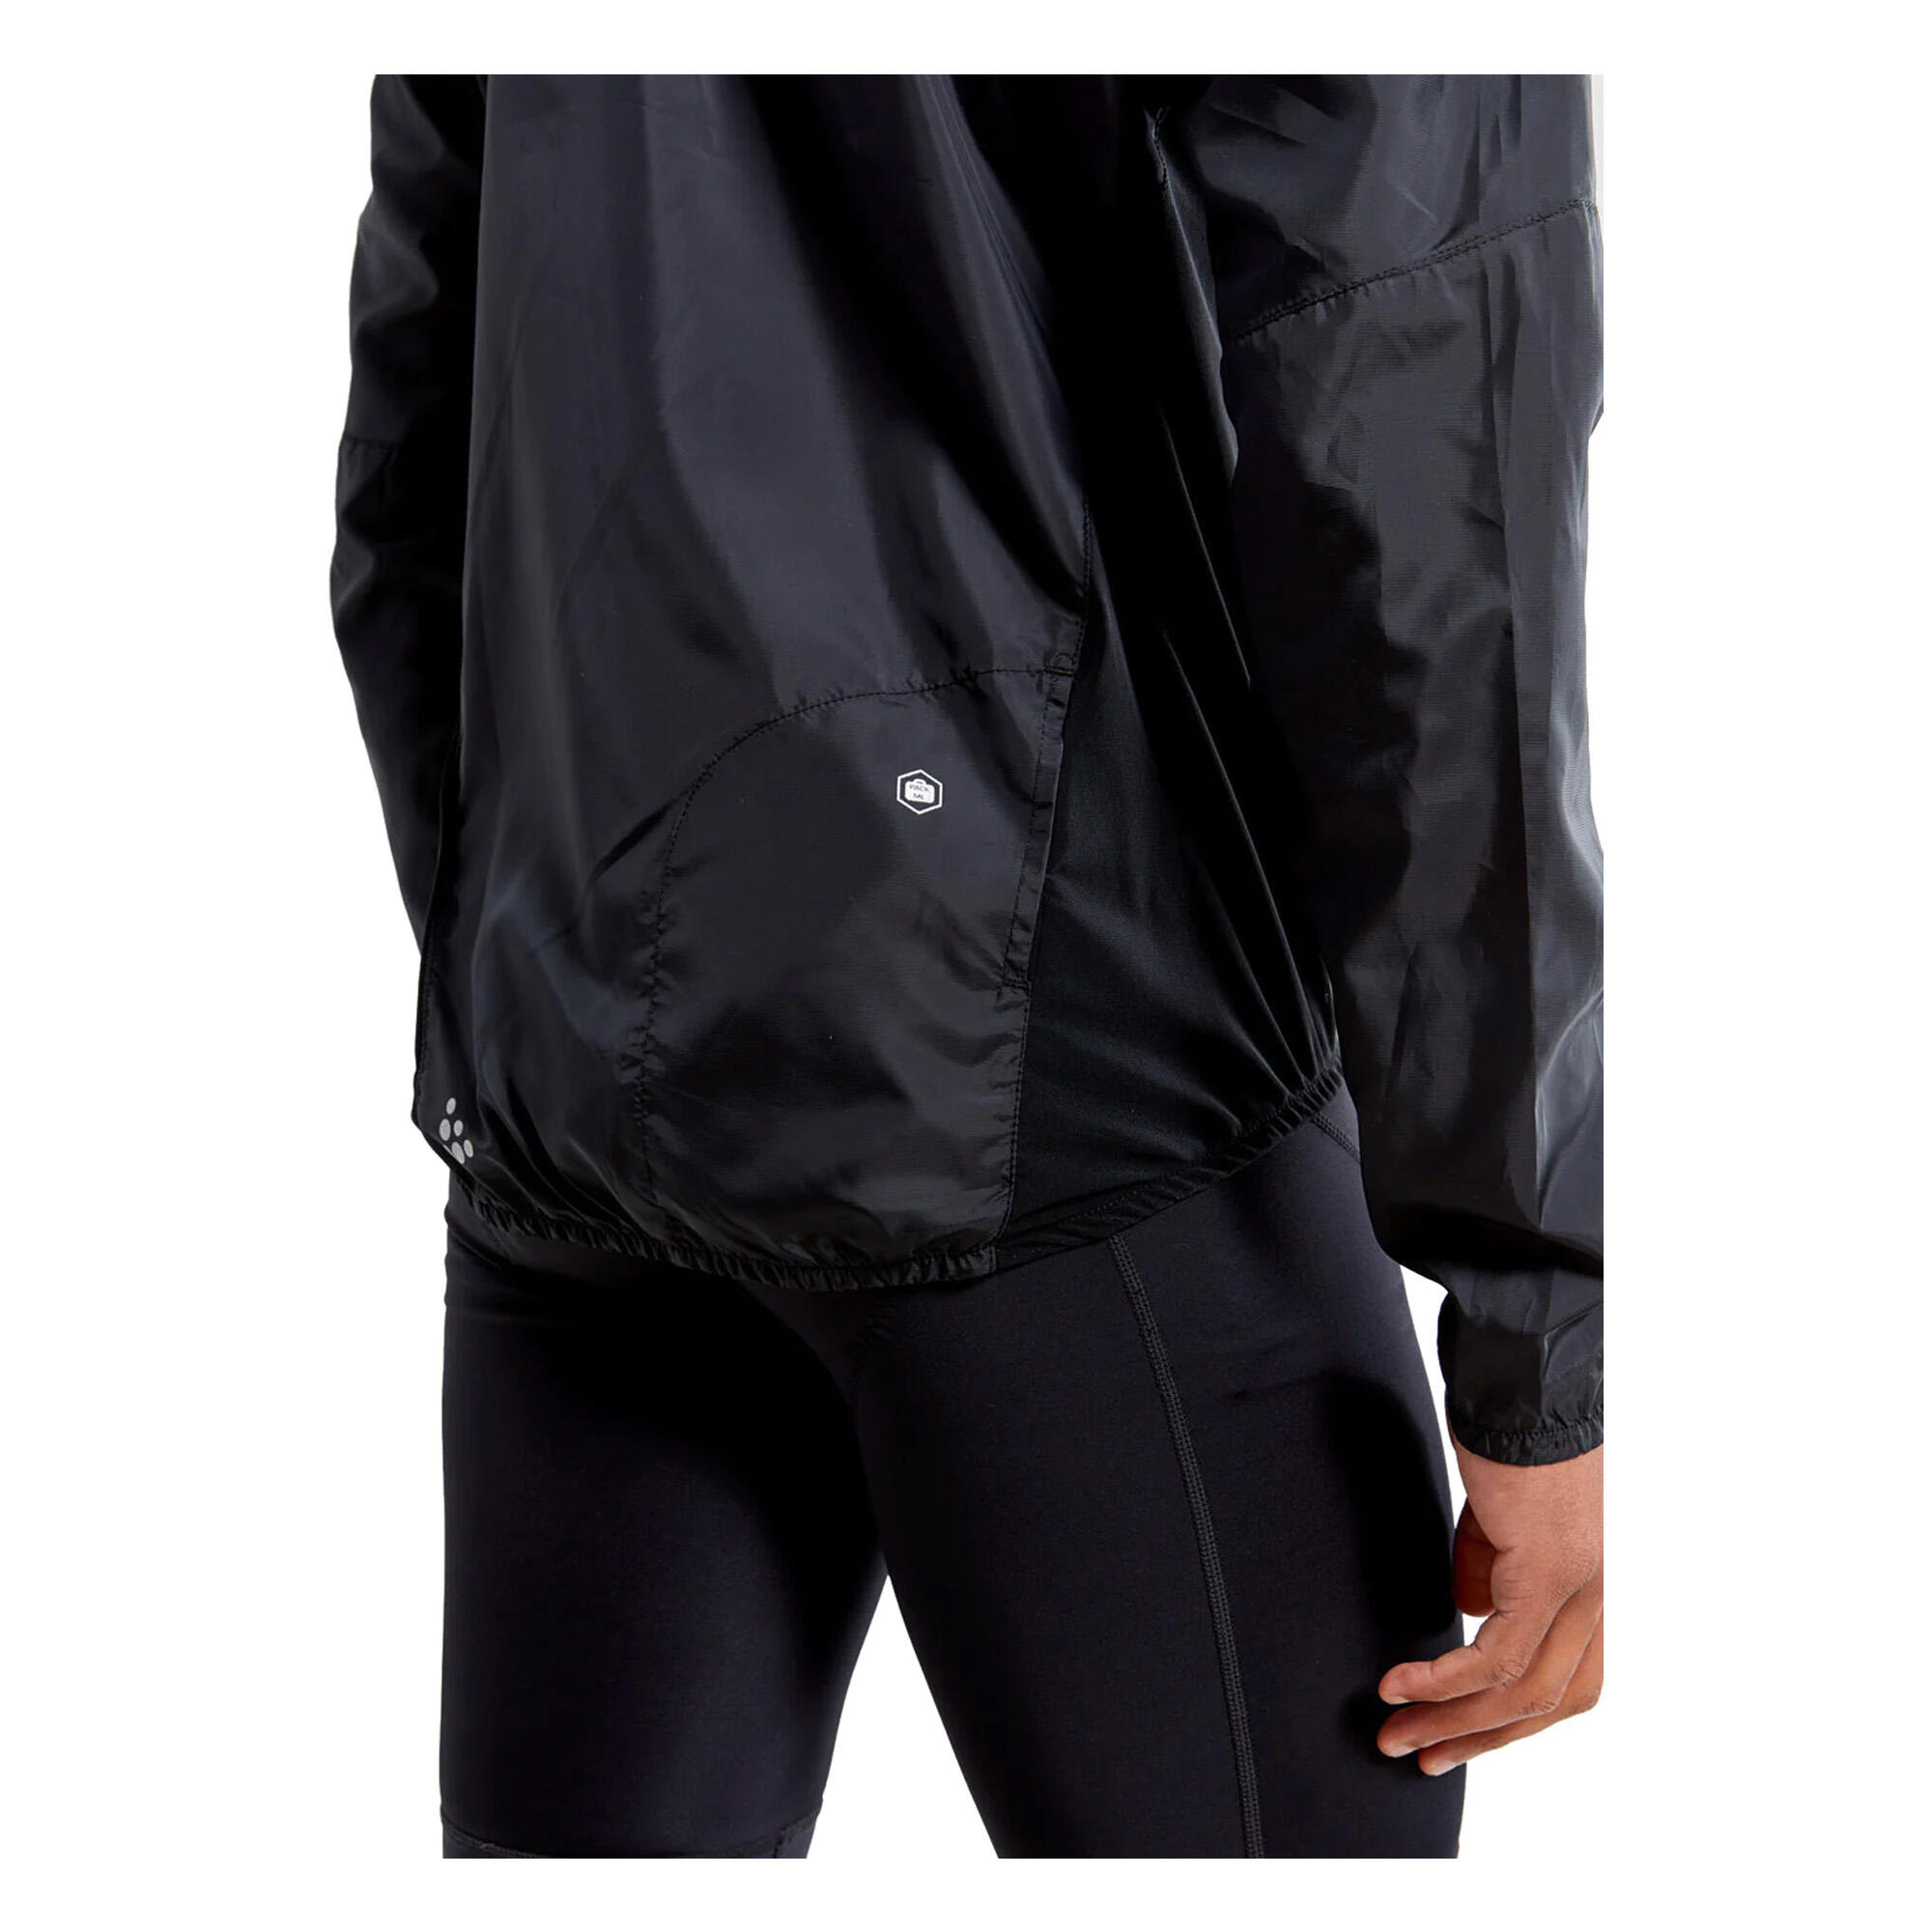 Mens Essence Windproof Cycling Jacket (Black) 4/4